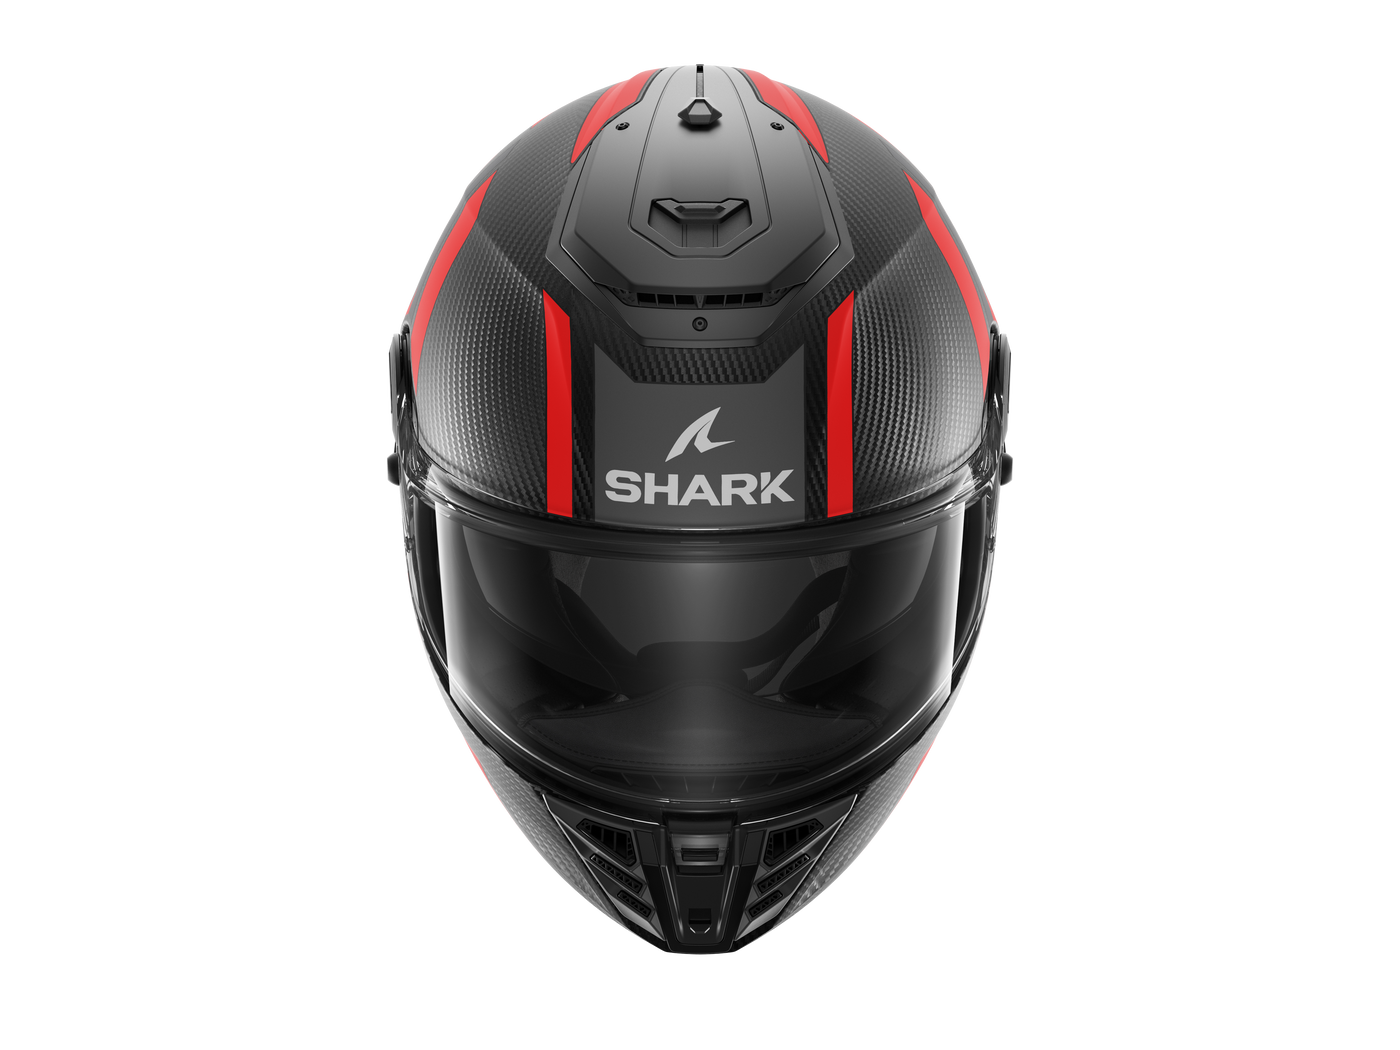 Shark Spartan RS Carbon Shawn Matt Black Grey Red Helmet (DAR)